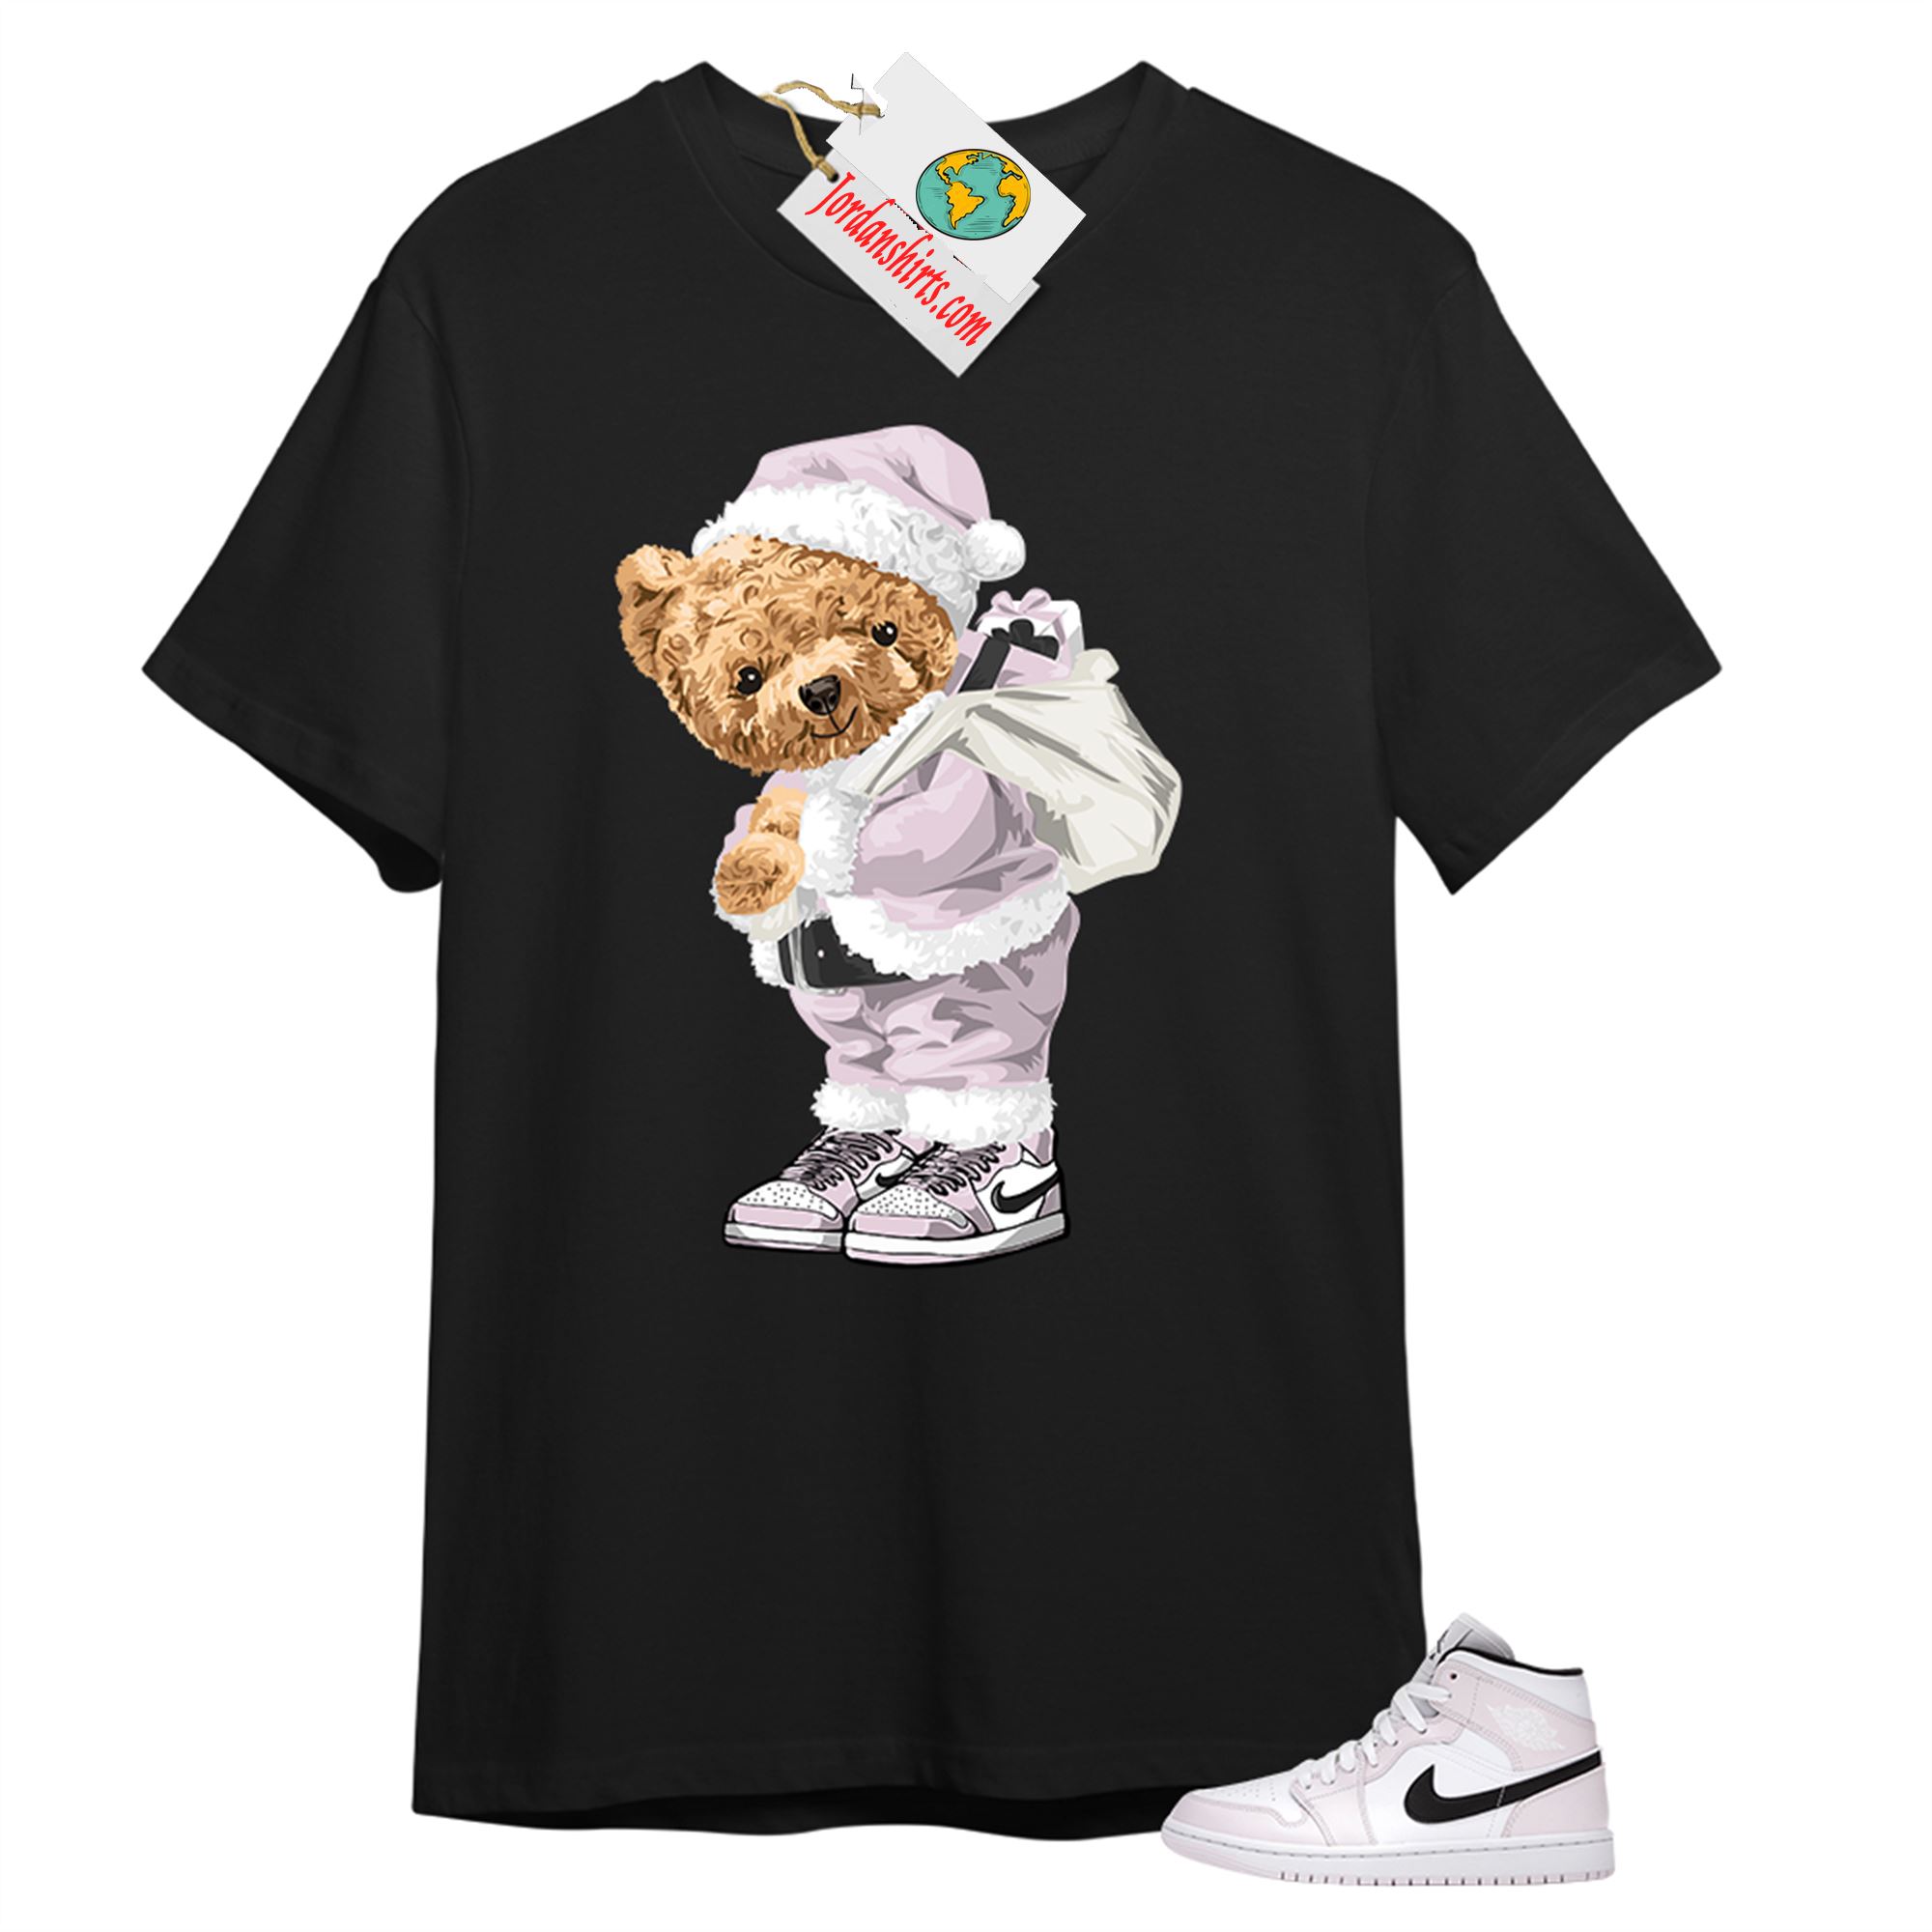 Jordan 1 Shirt, Teddy Bear In Santa Claus Black T-shirt Air Jordan 1 Barely Rose 1s Full Size Up To 5xl